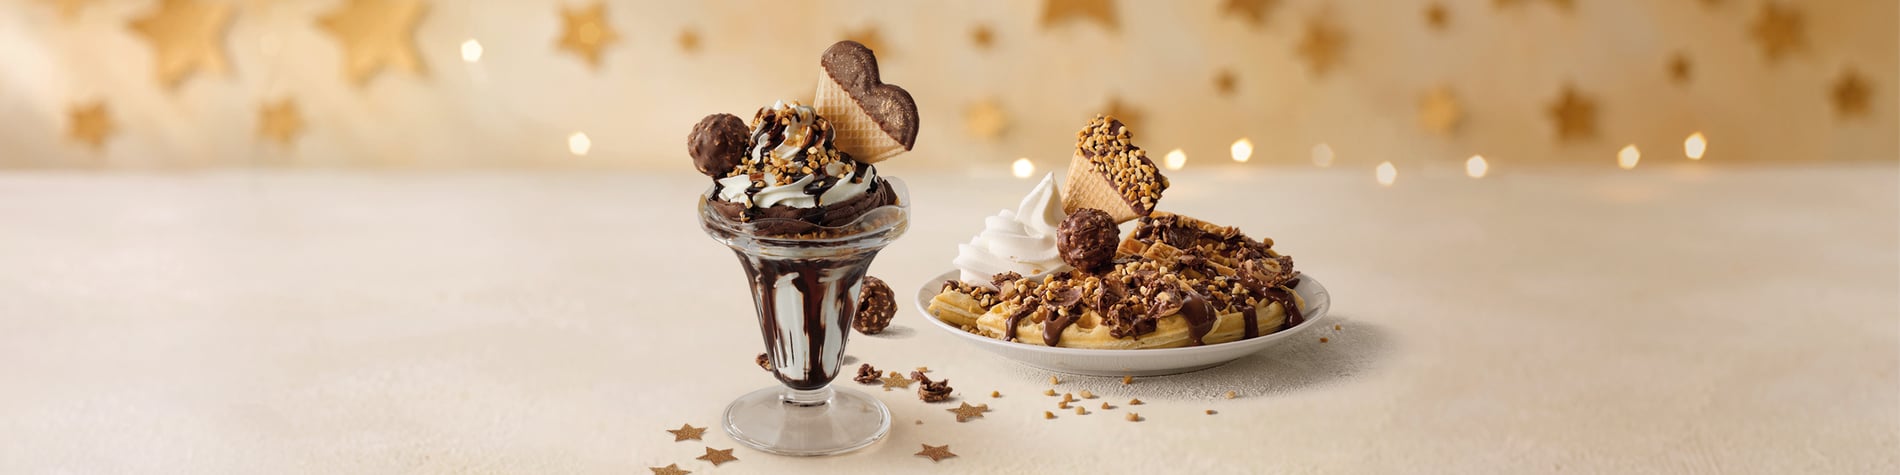 The NEW Ferrero Rocher® Sunnydae & the Ferrero Rocher® Waffle on a beige surface with confetti and golden stars.